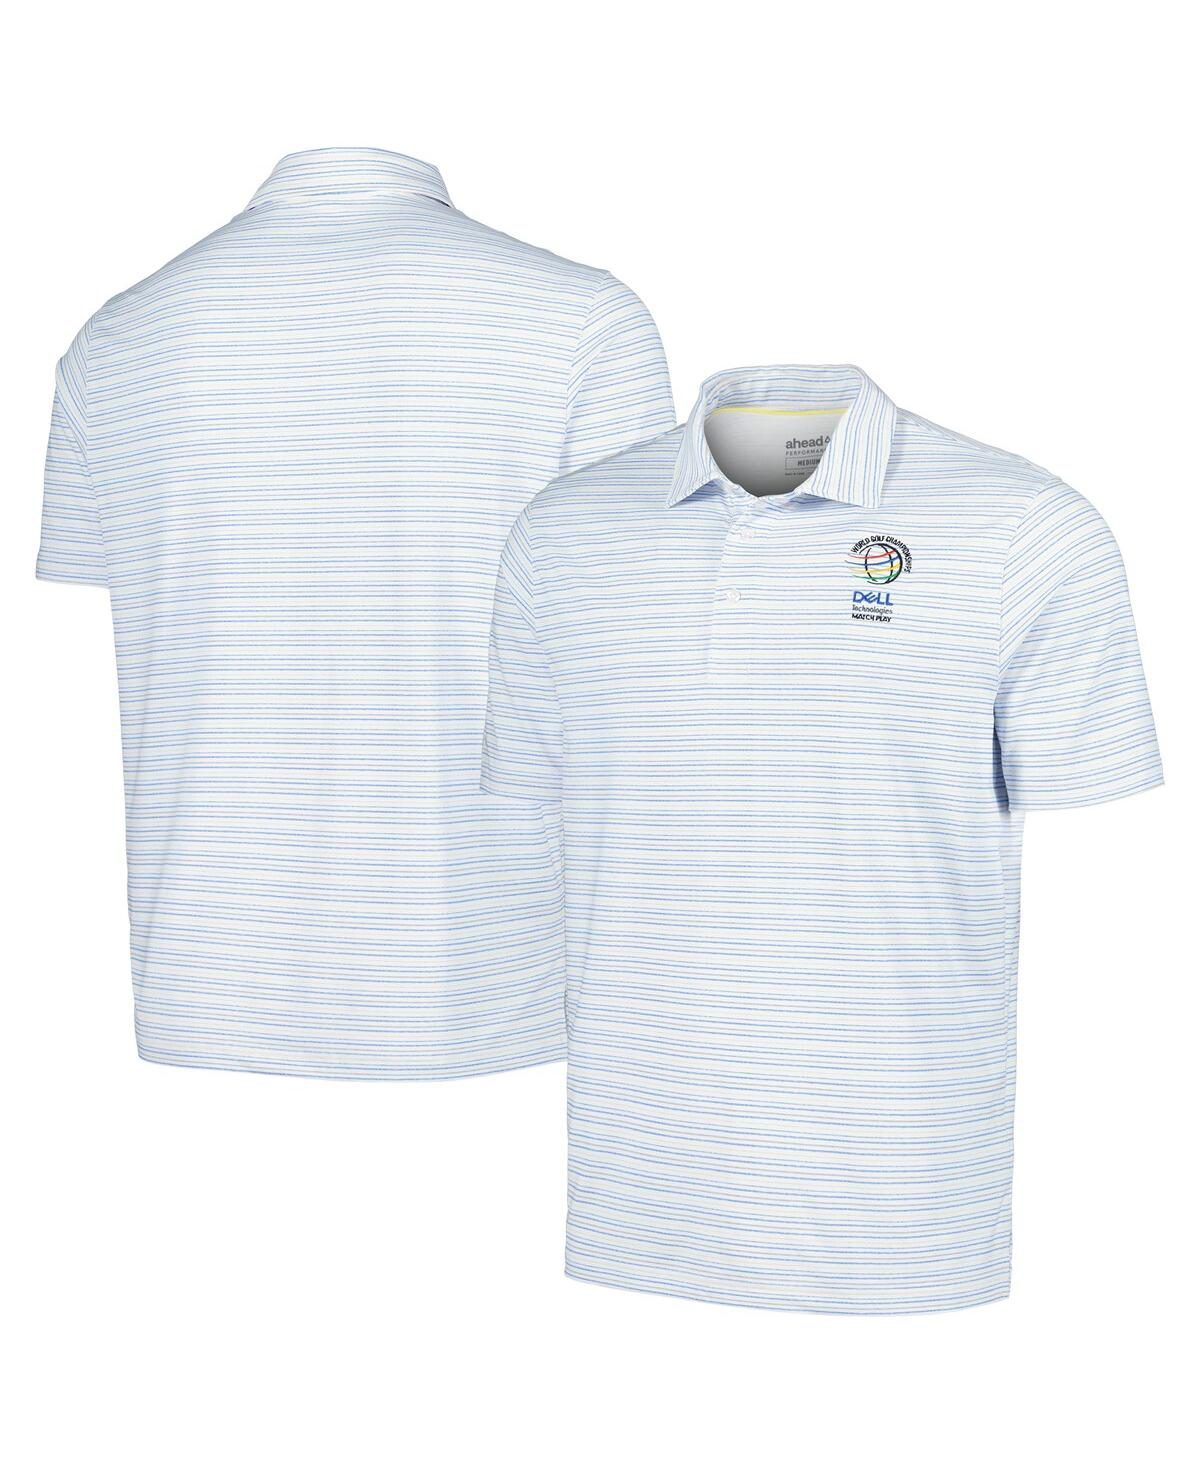 Shop Ahead Men's  White Wgc-dell Technologies Match Play Islander Feed Striped Polo Shirt